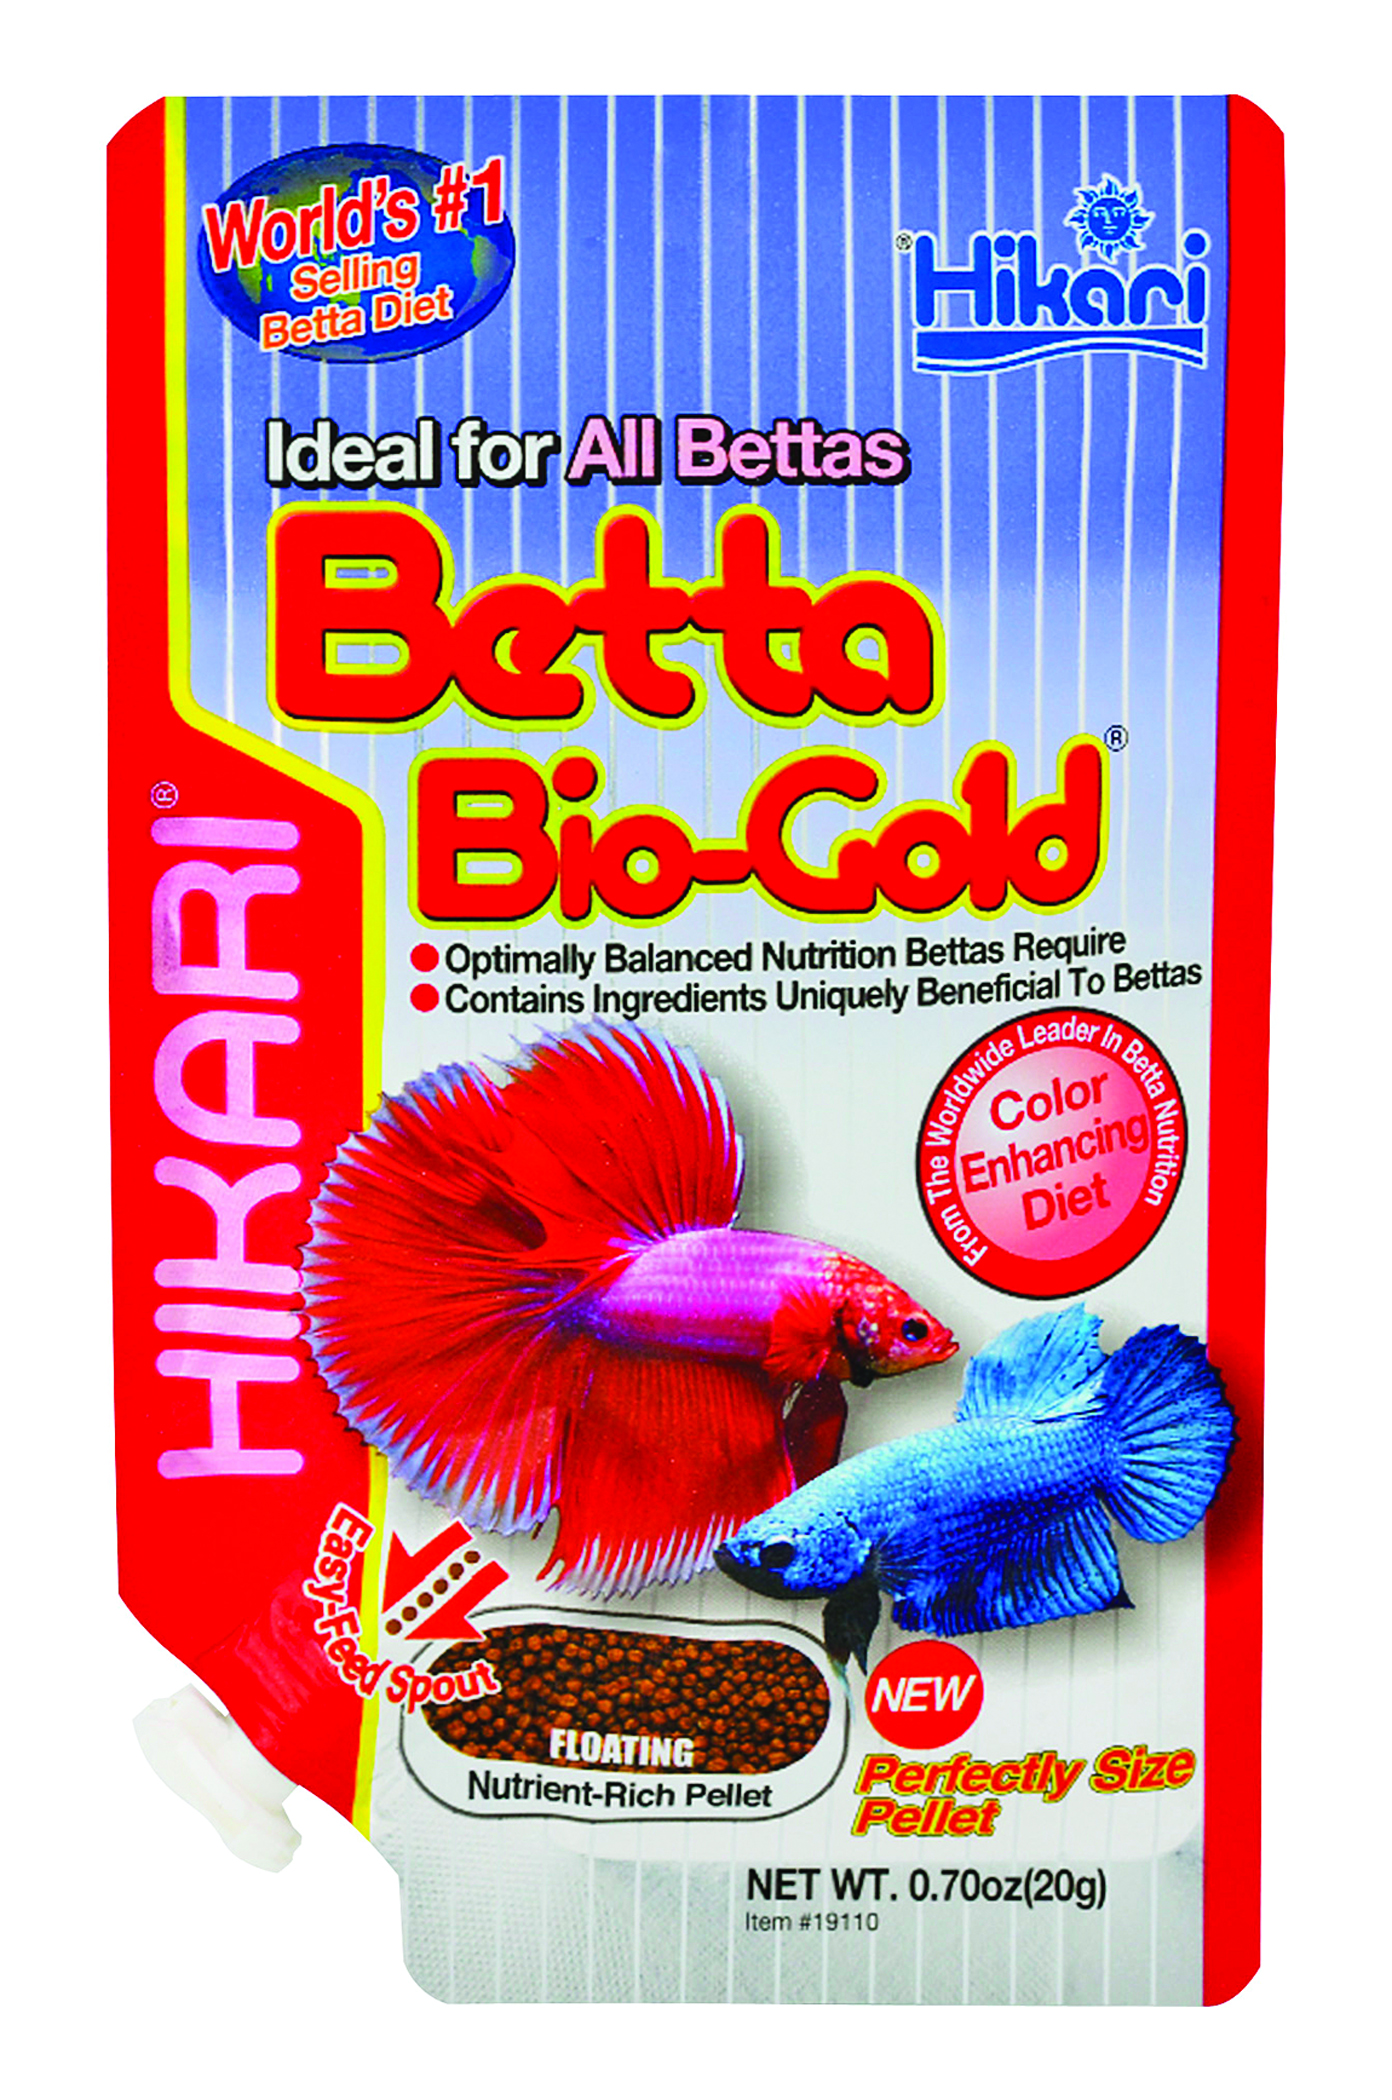 Betta Bio-Gold